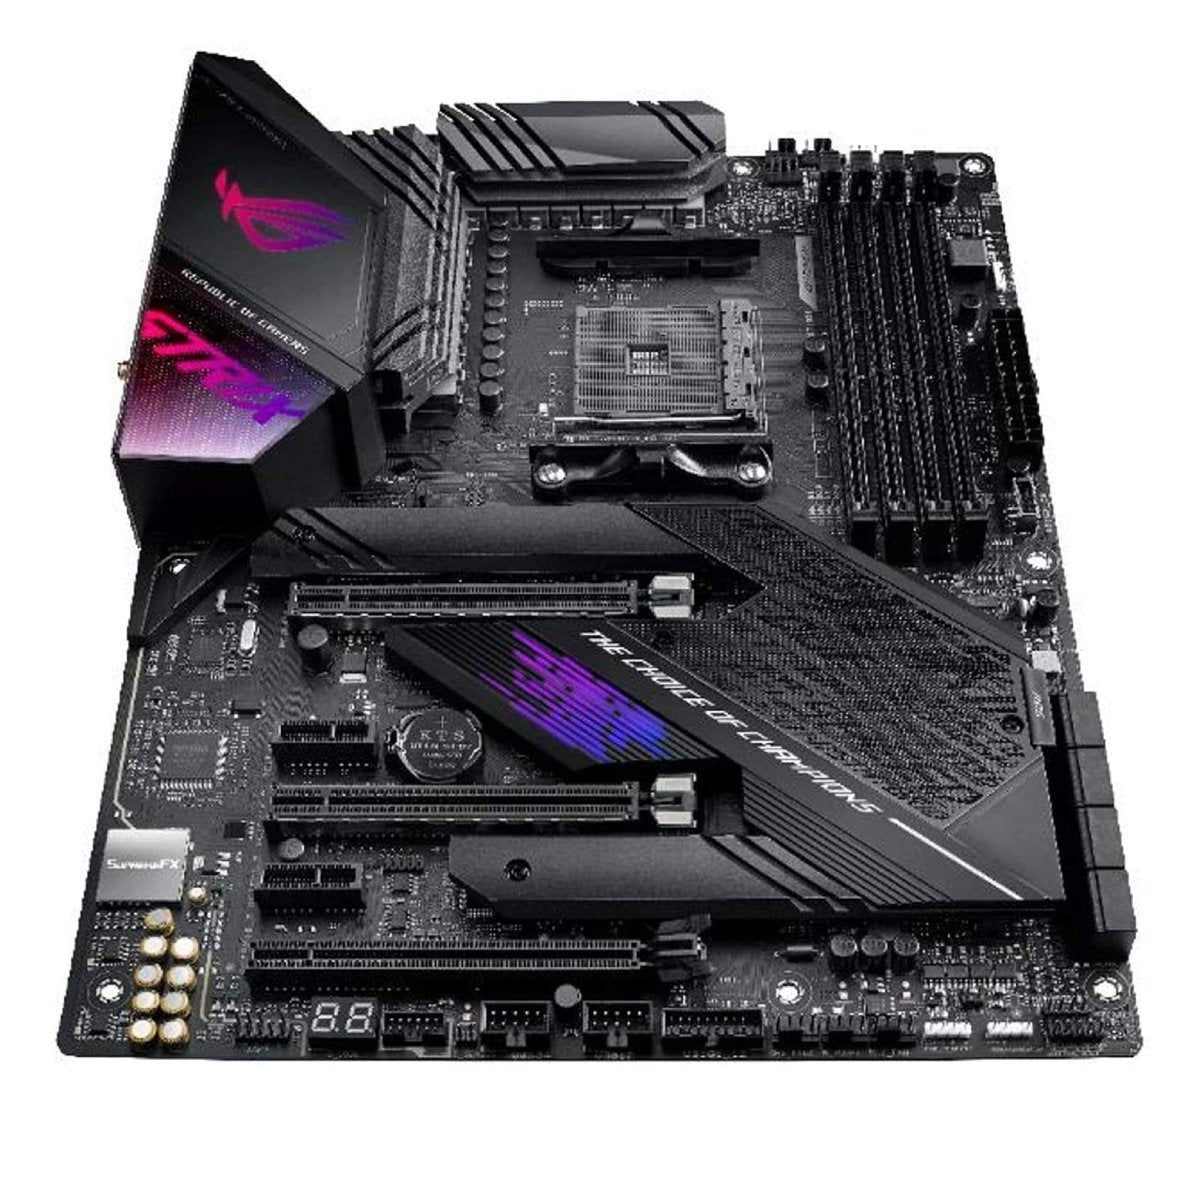 Asus ROG Strix Gaming AMD X570 AM4 ATX DDR4 Motherboard - Store 974 | ستور ٩٧٤